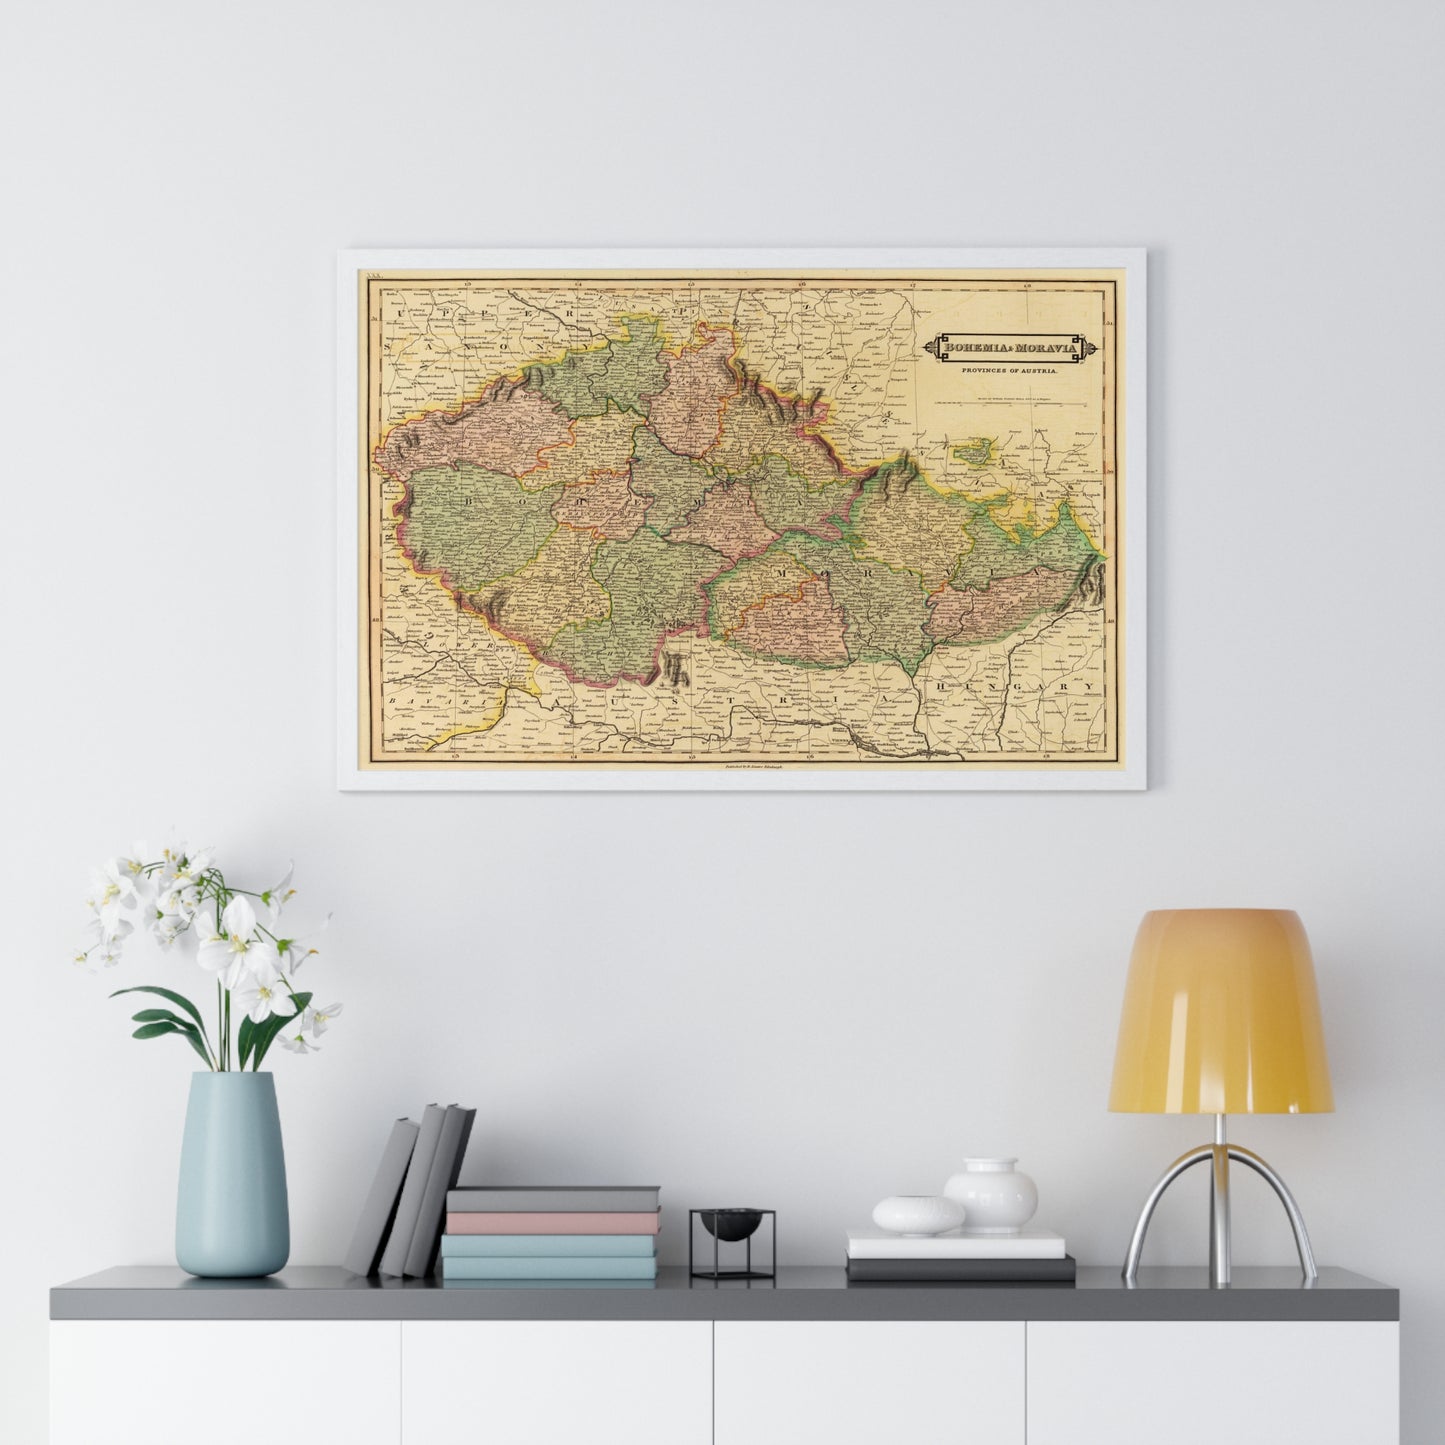 Bohemia & Moravia - 19th Century Map (Premium Wood Frame)